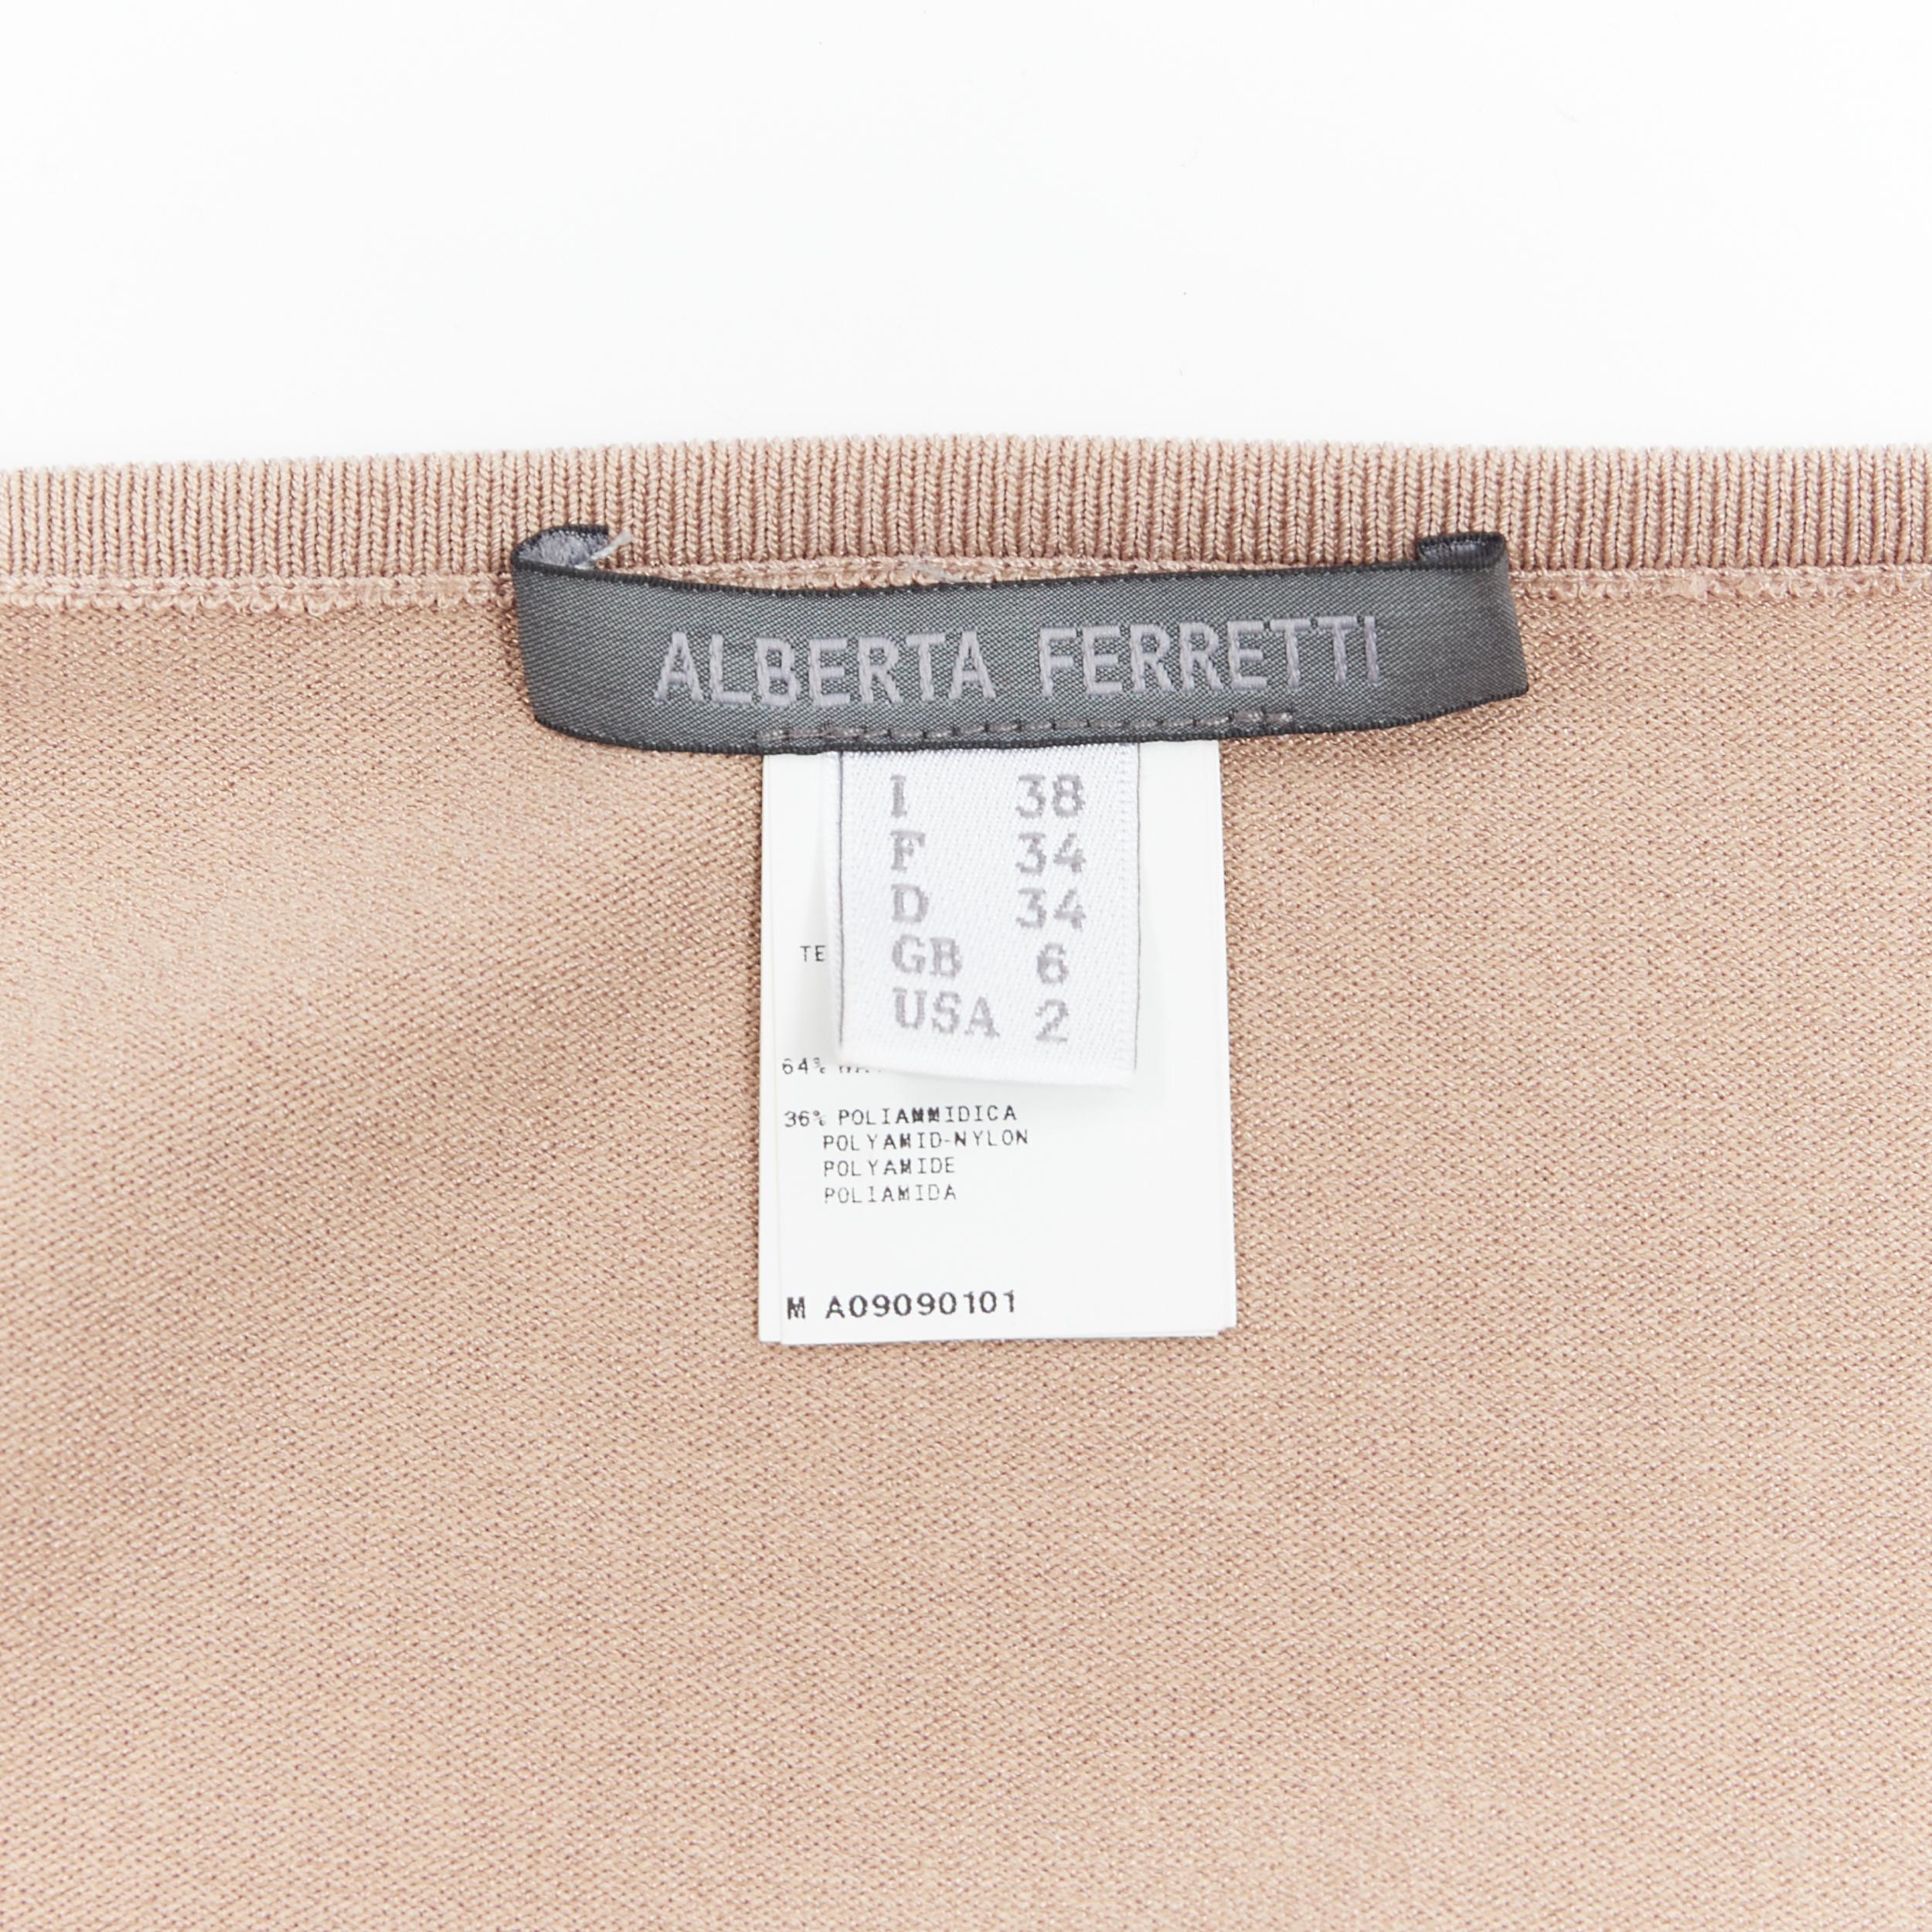 ALBERTA FERRETTI rayon blend knit nude beige floral cut out cardigan sweater XS 5